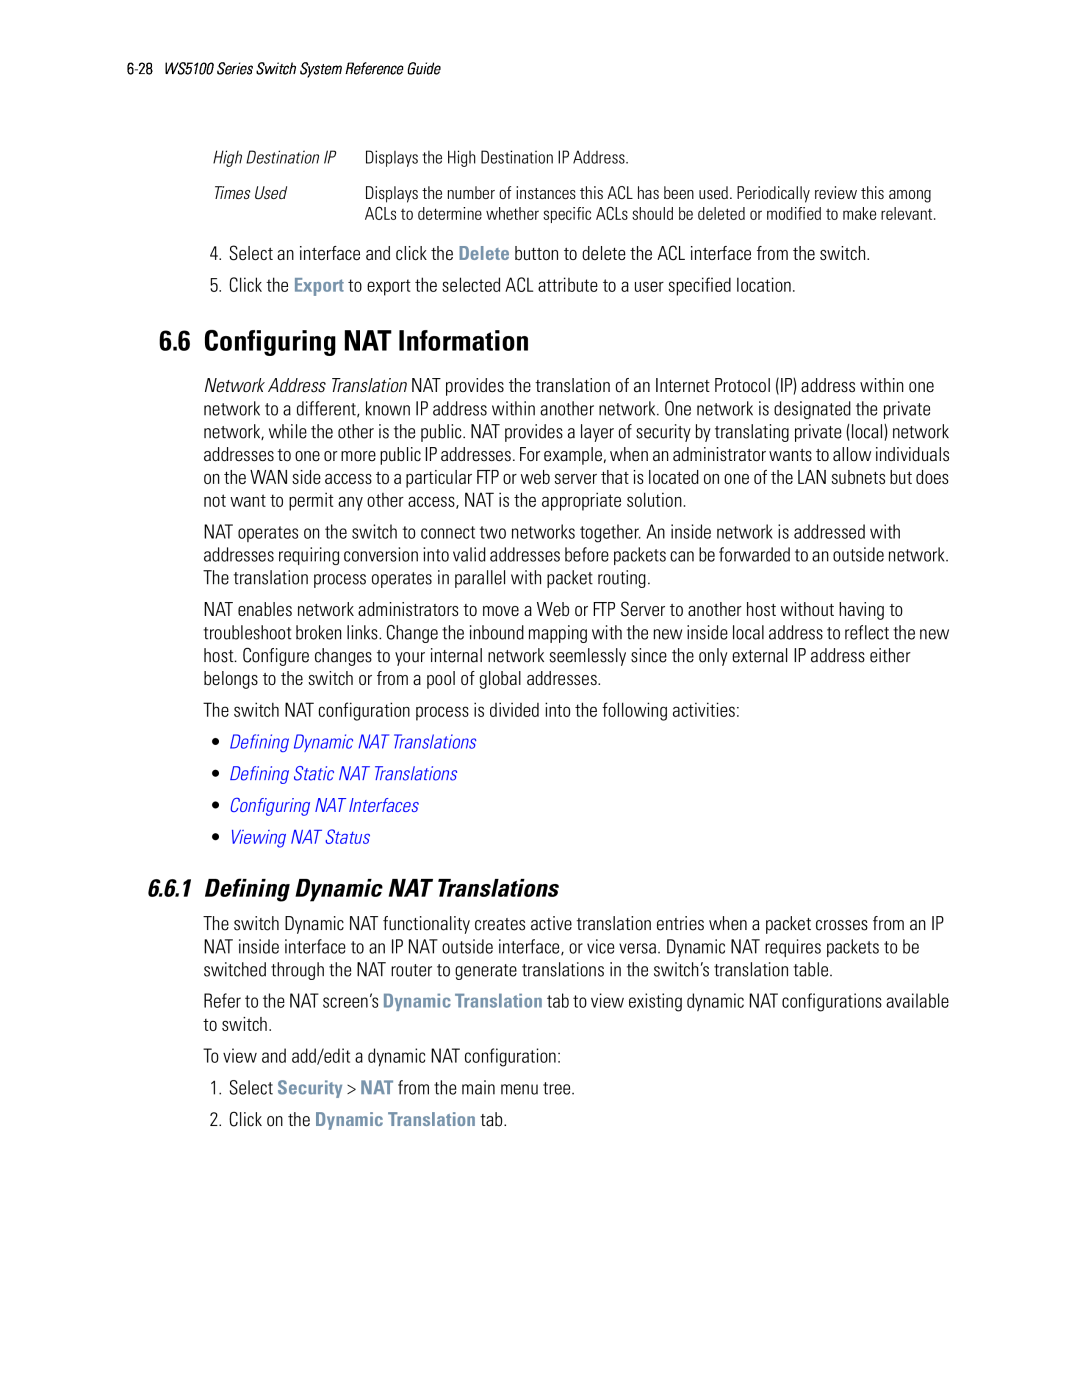 Motorola WS5100 6.6Configuring NAT Information, 6.6.1Defining Dynamic NAT Translations, •Defining Dynamic NAT Translations 